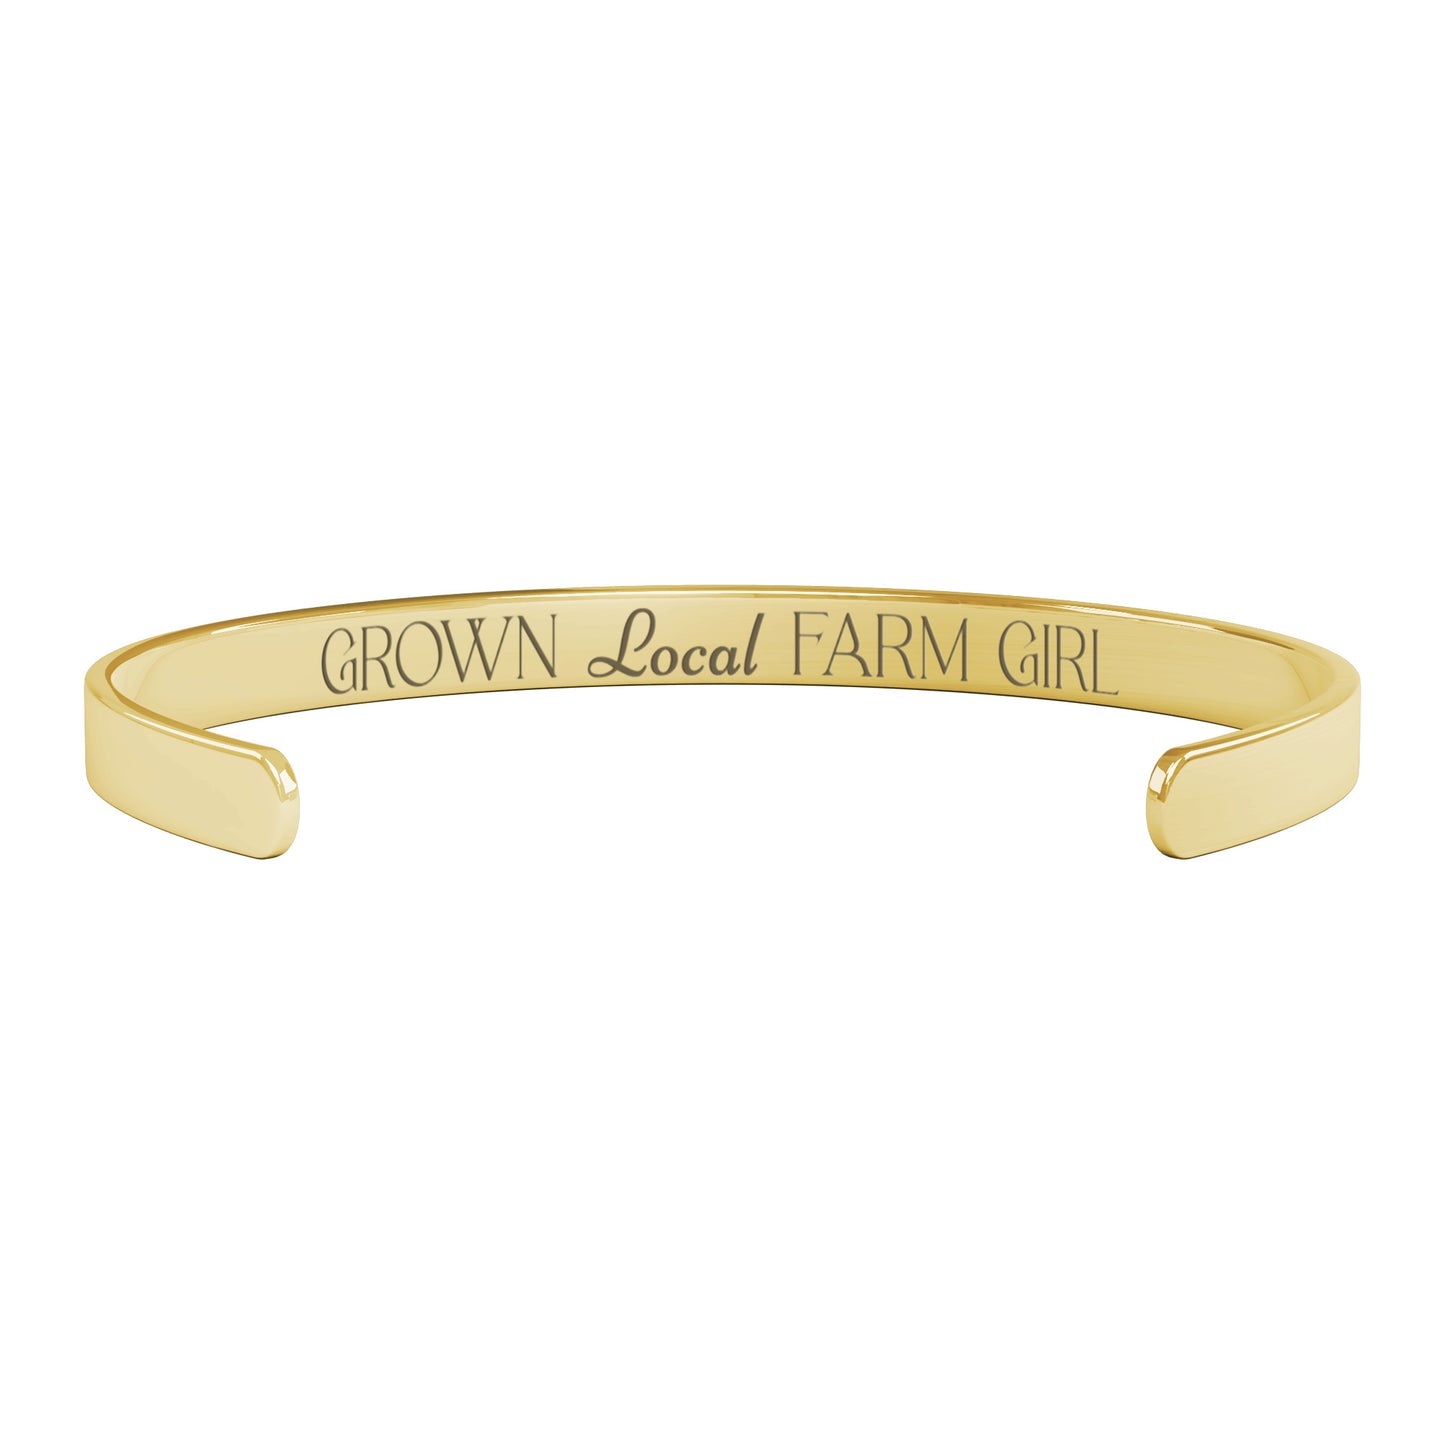 Grown Local Farm Girl Cuff Bracelet - FREE SHIPPING